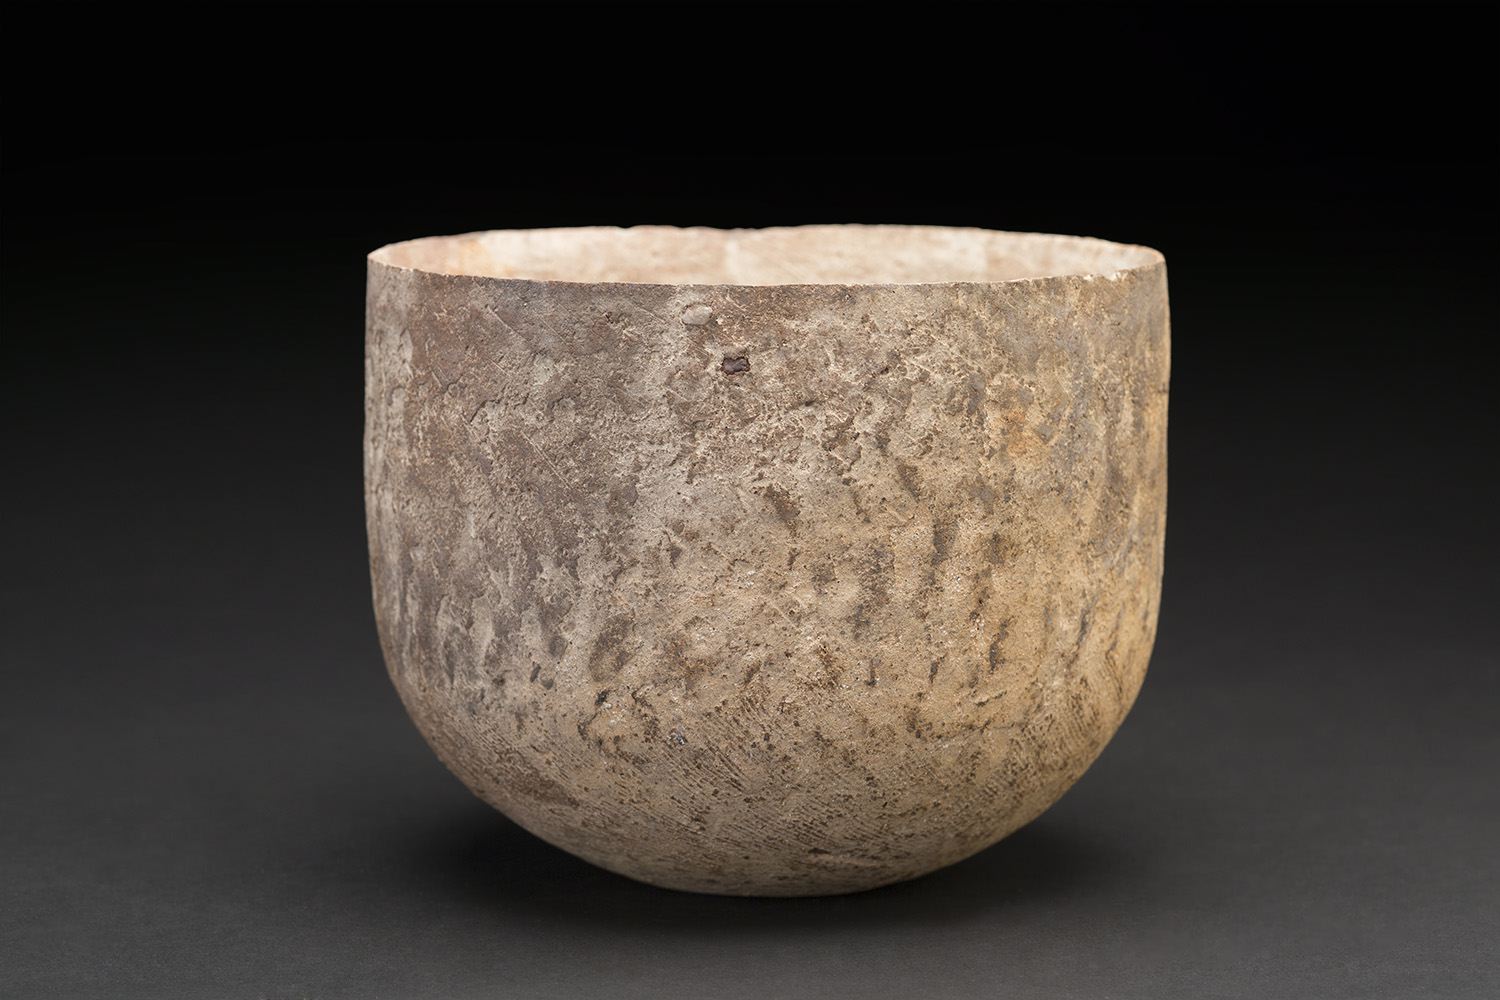   Akihiro Nikaido    Bowl  , 2015 Ceramic 5.25 x 7 x 7 inches 13.3 x 17.8 x 17.8 cm ANk 11 